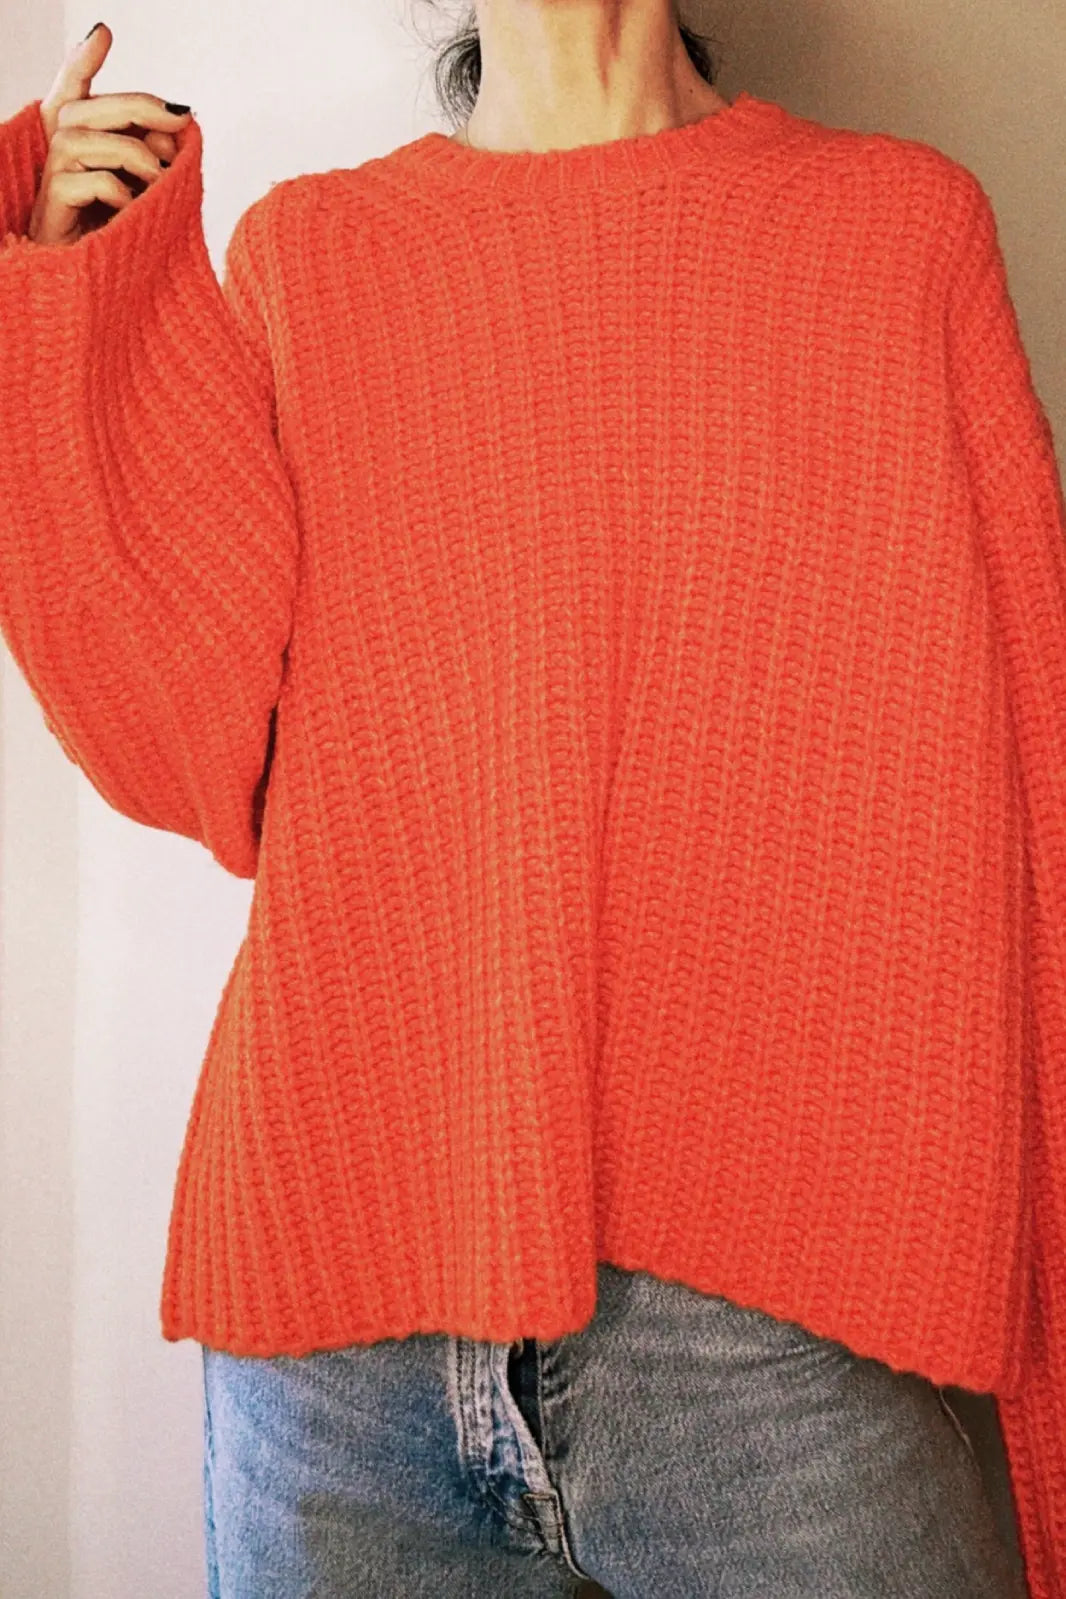 Sample 18 Sweater